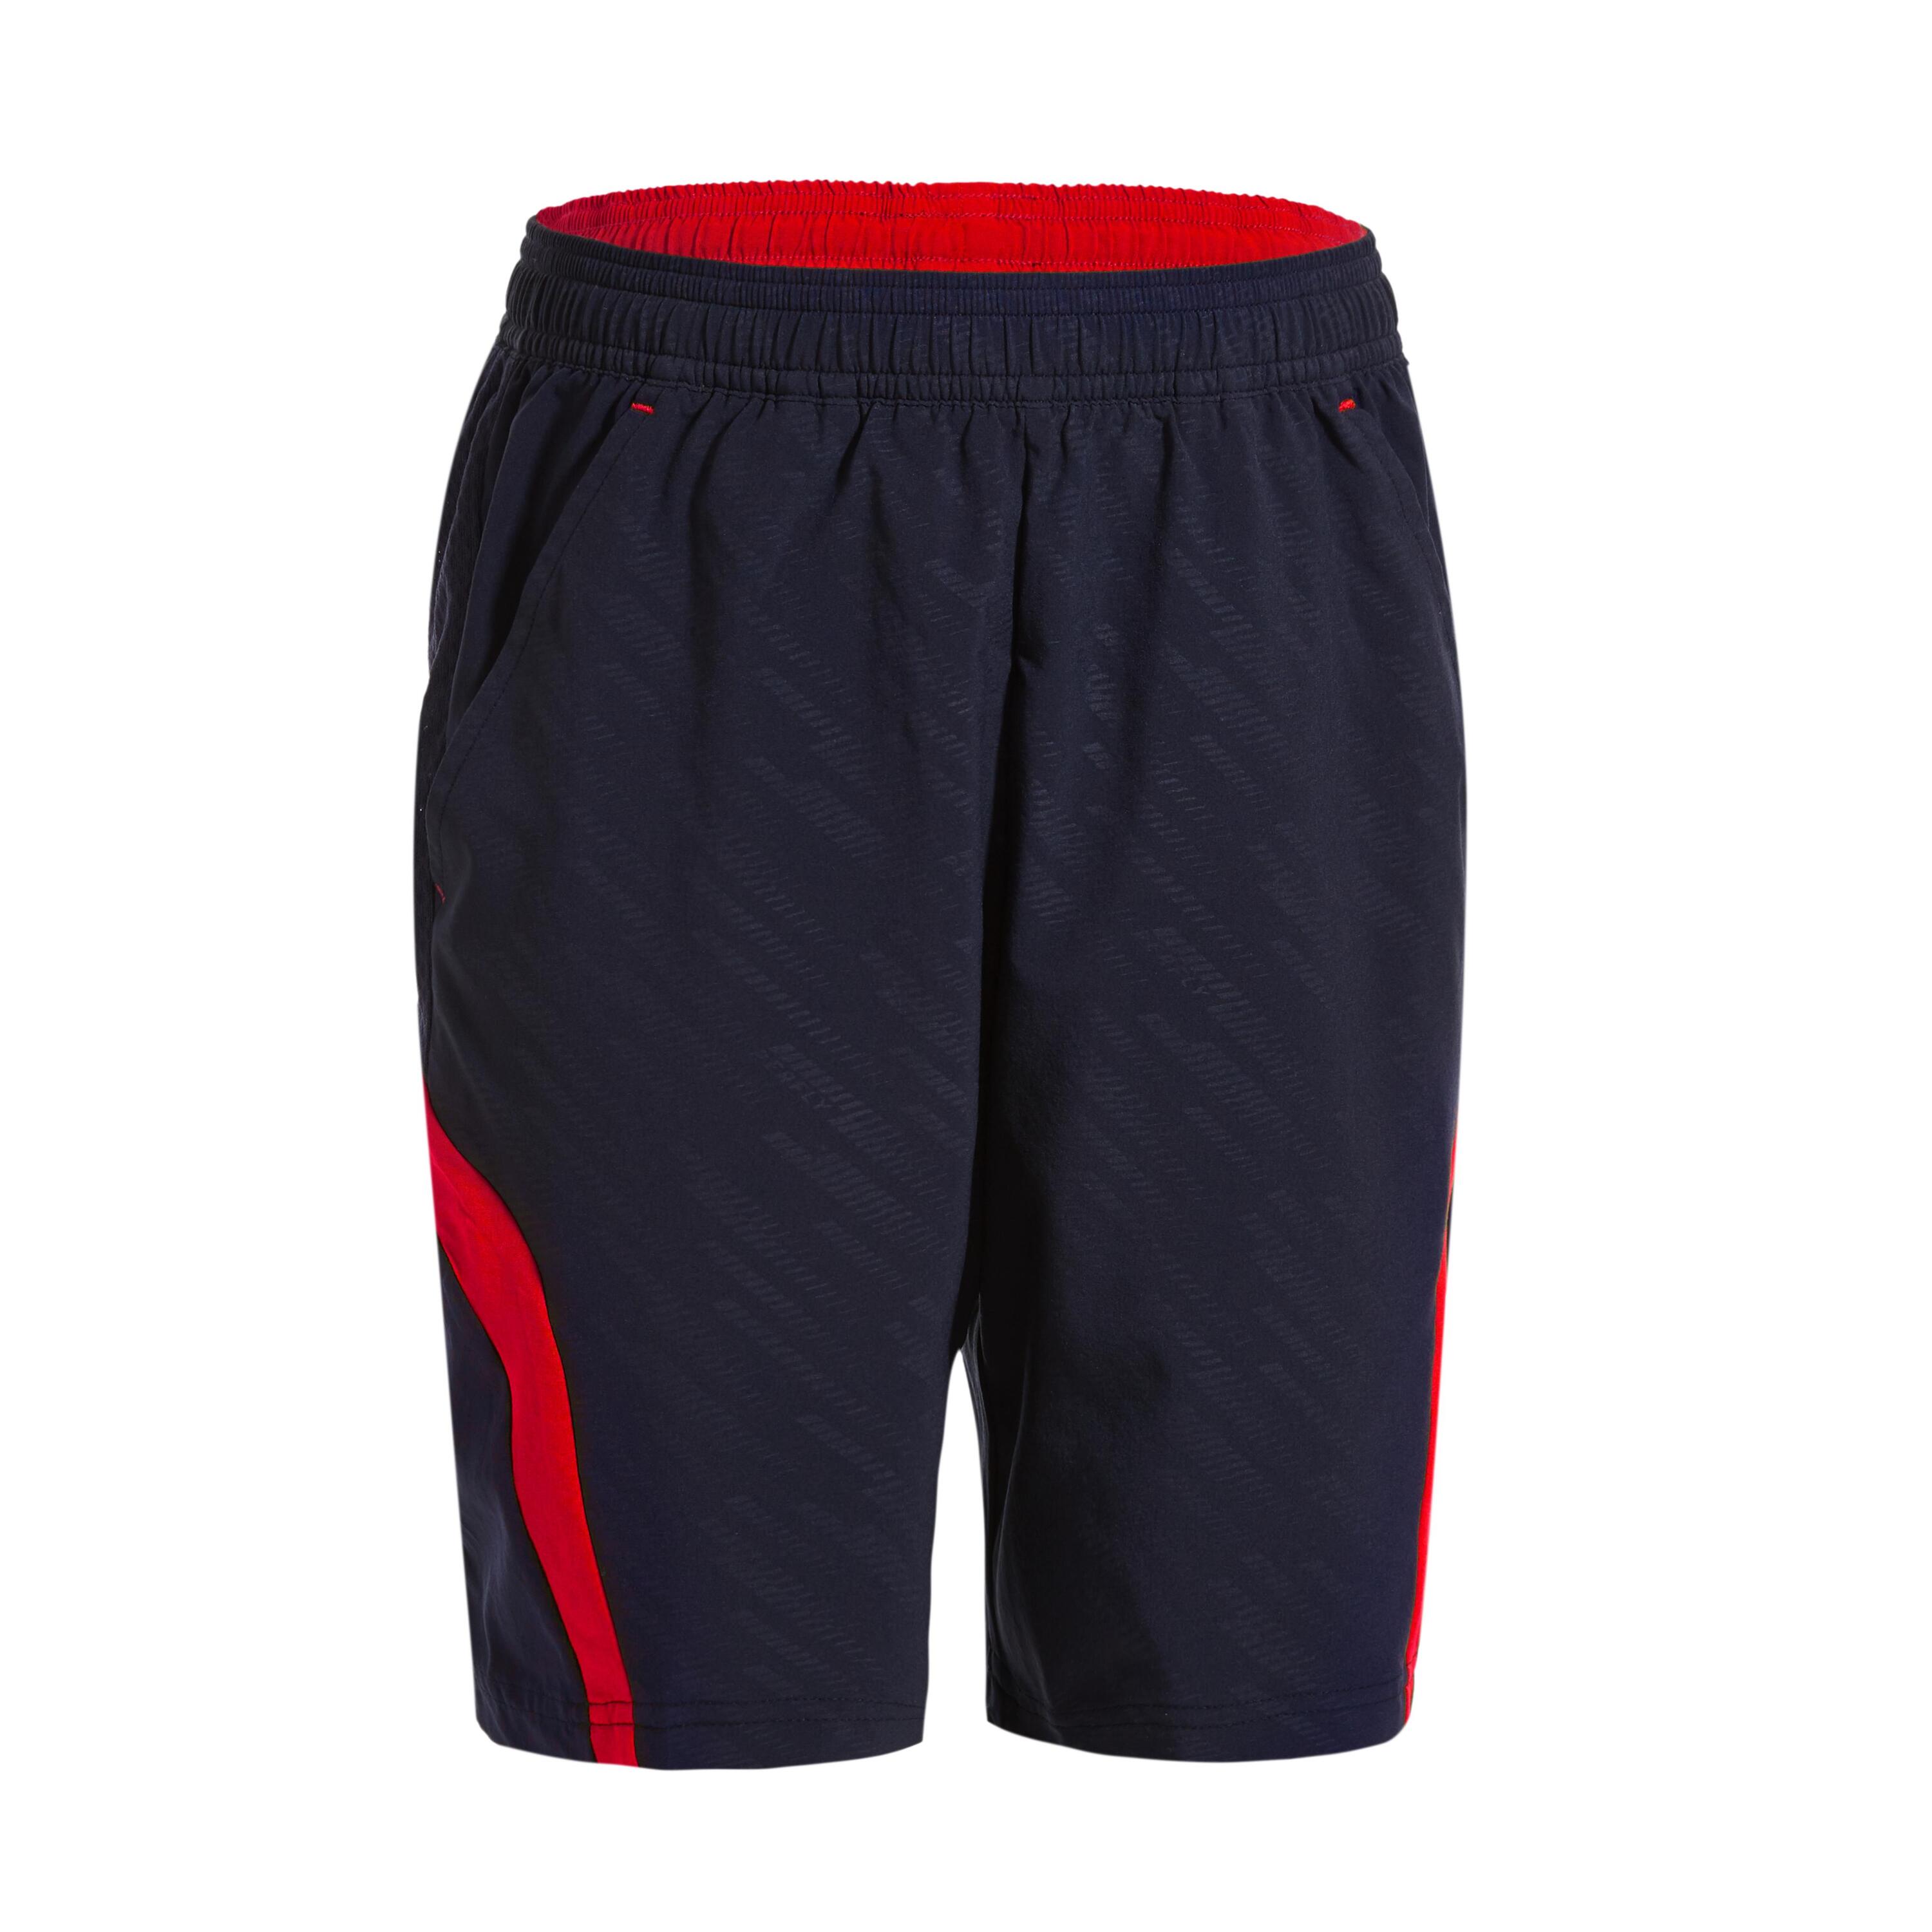 PERFLY Shorts 560 JR NAVY RED